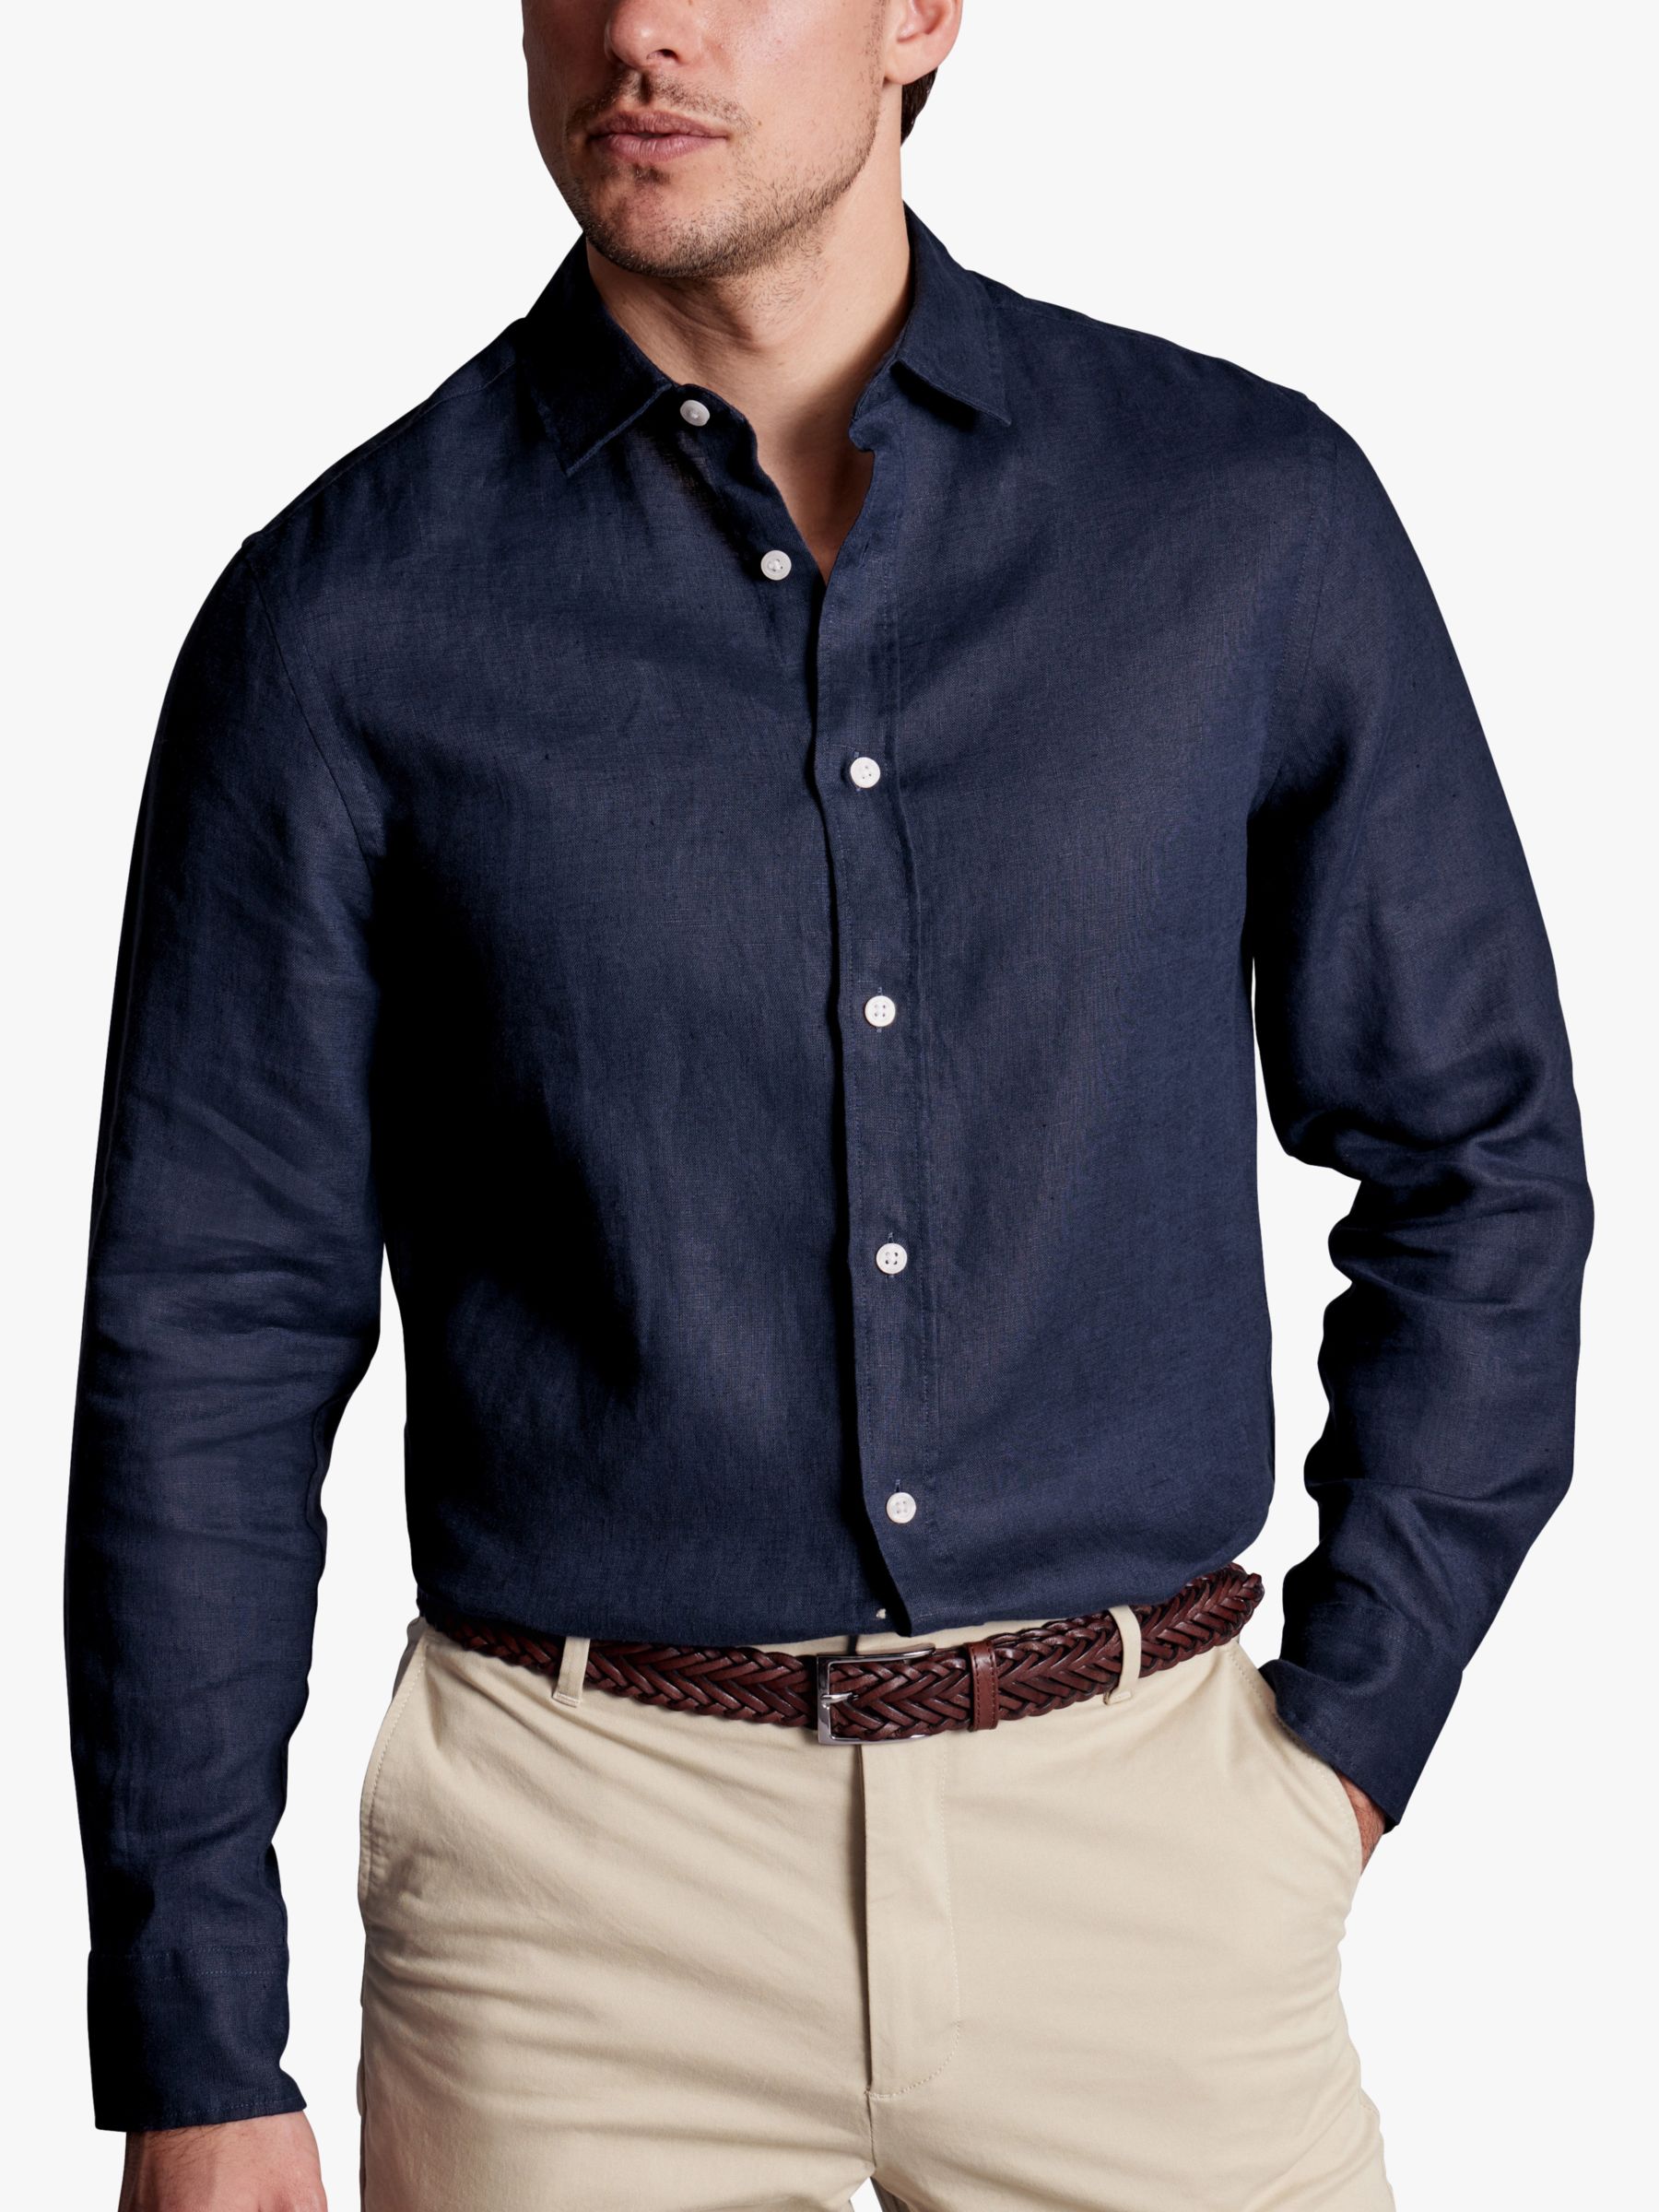 Charles Tyrwhitt Non-Iron Twill Linen Slim Fit Shirt, Navy, S